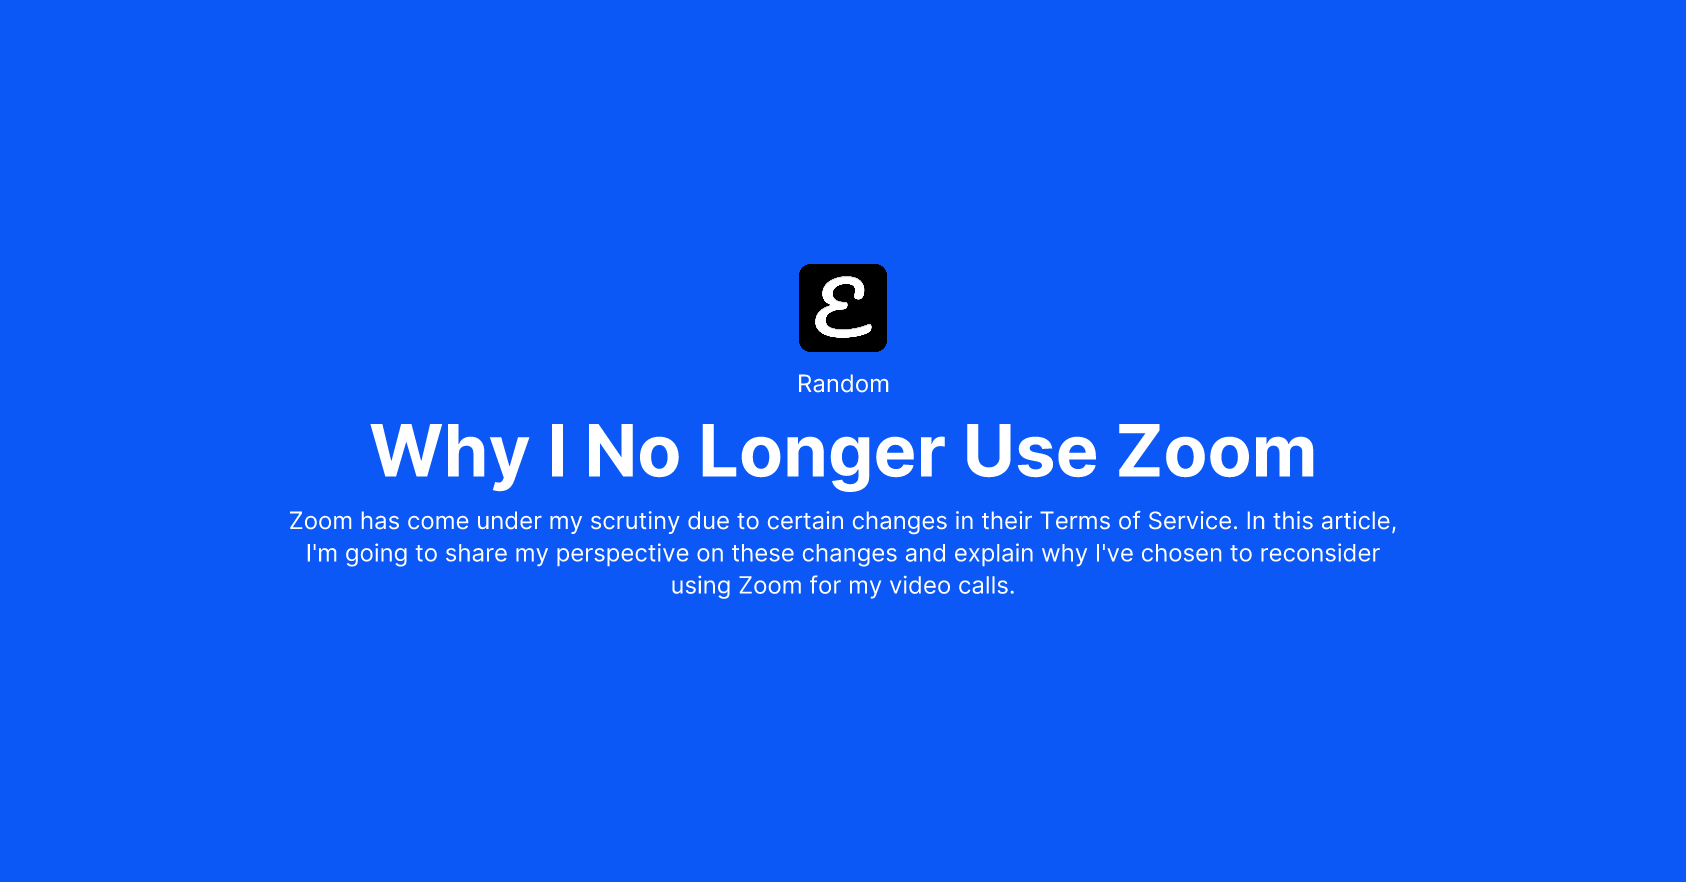 Why I No Longer Use Zoom by Eric David Smith